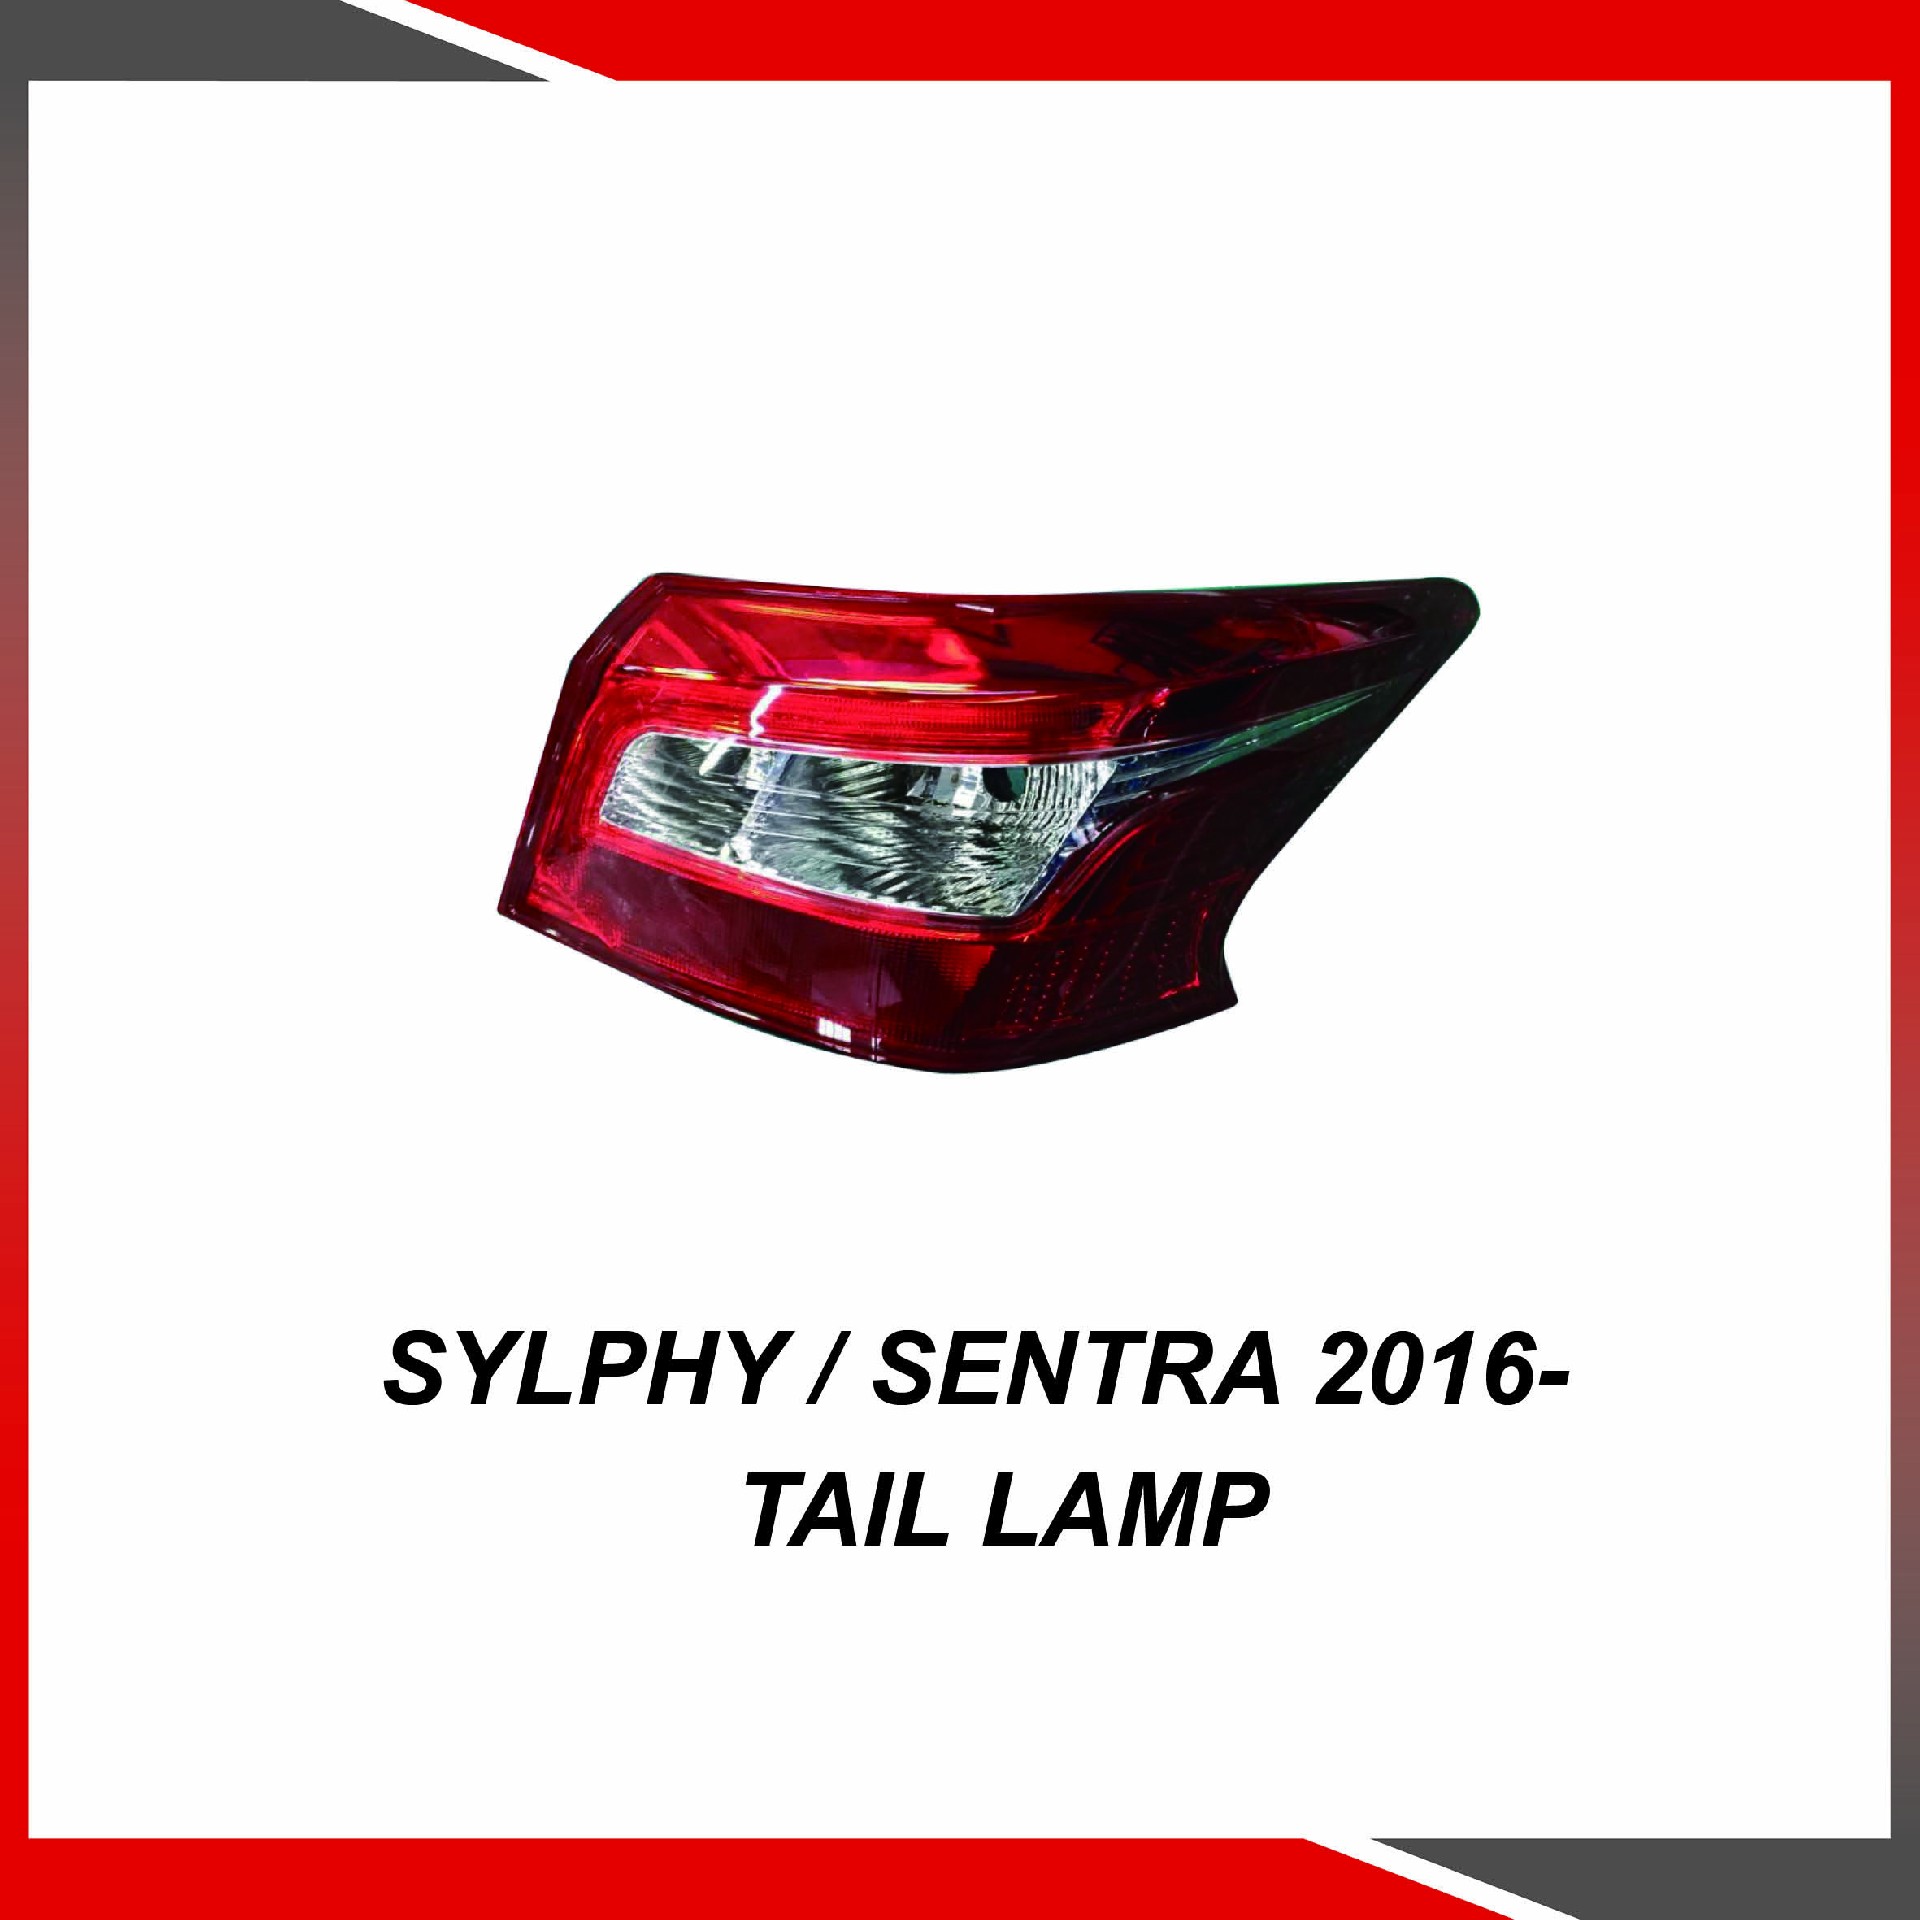 SYLPHY SENTRA 2016-4.jpg